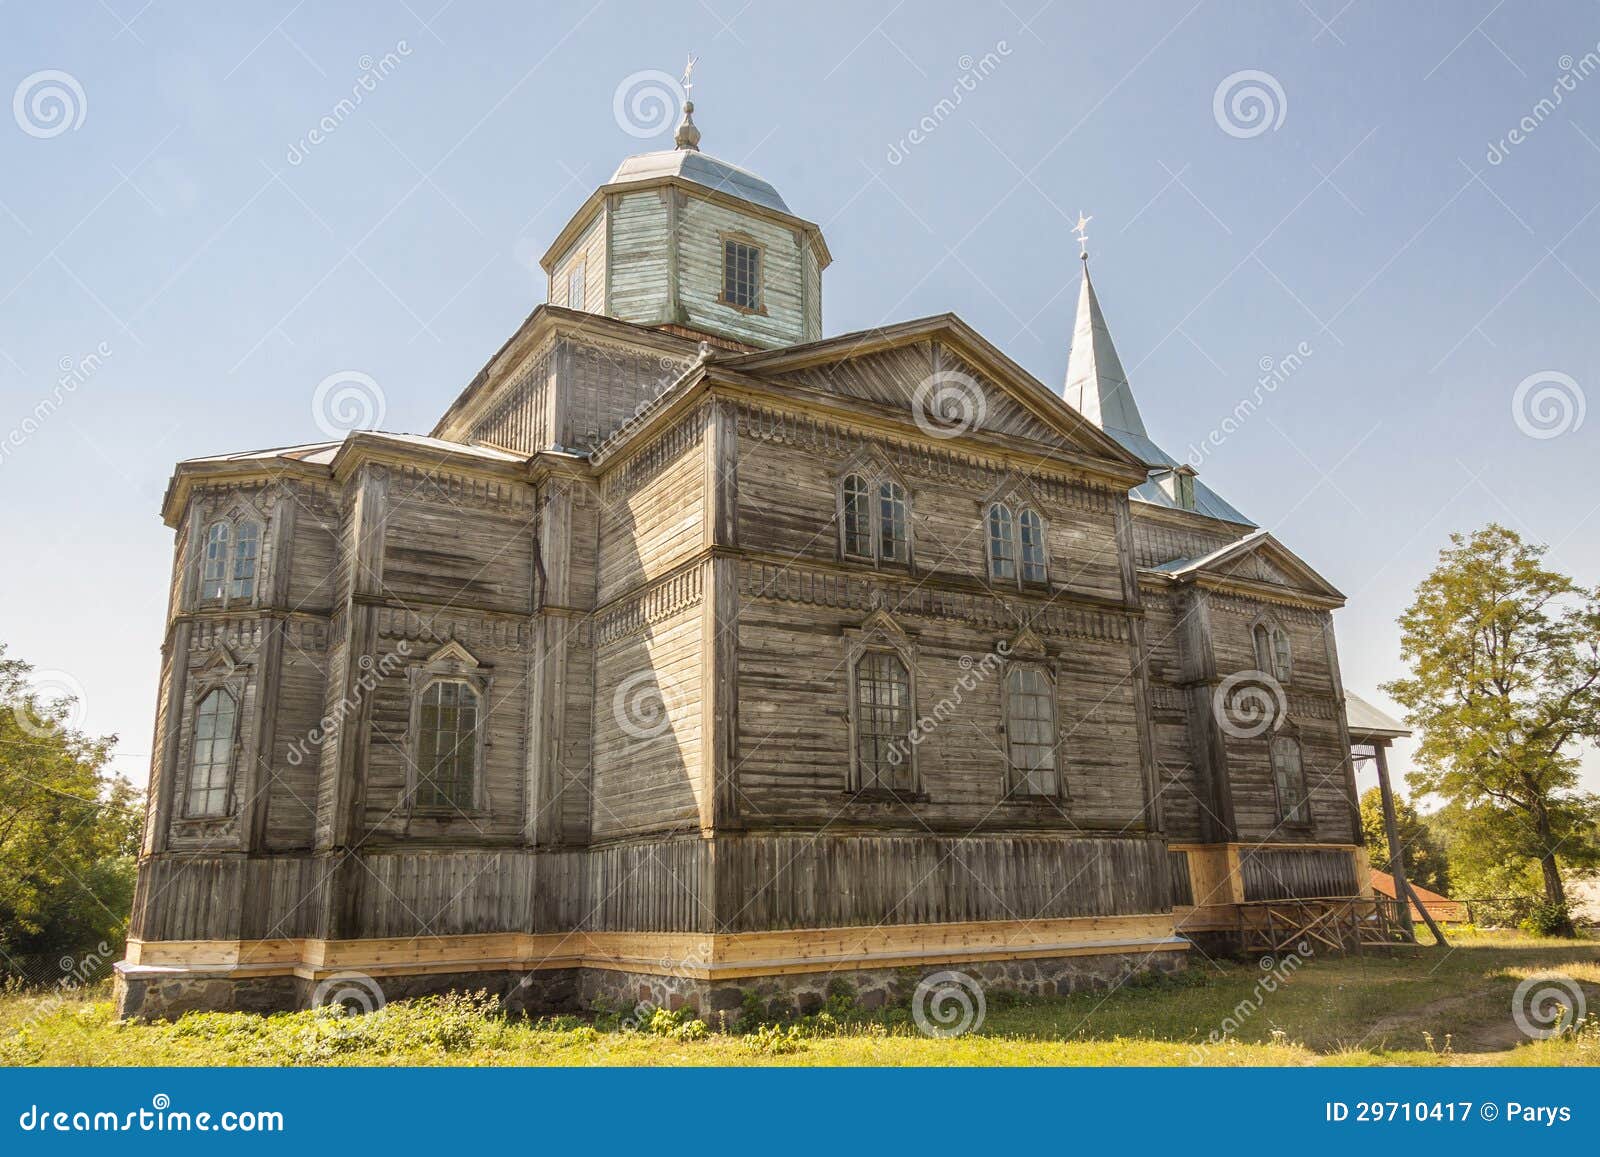 pobirka - orthodoxy church, ukraine, europe.